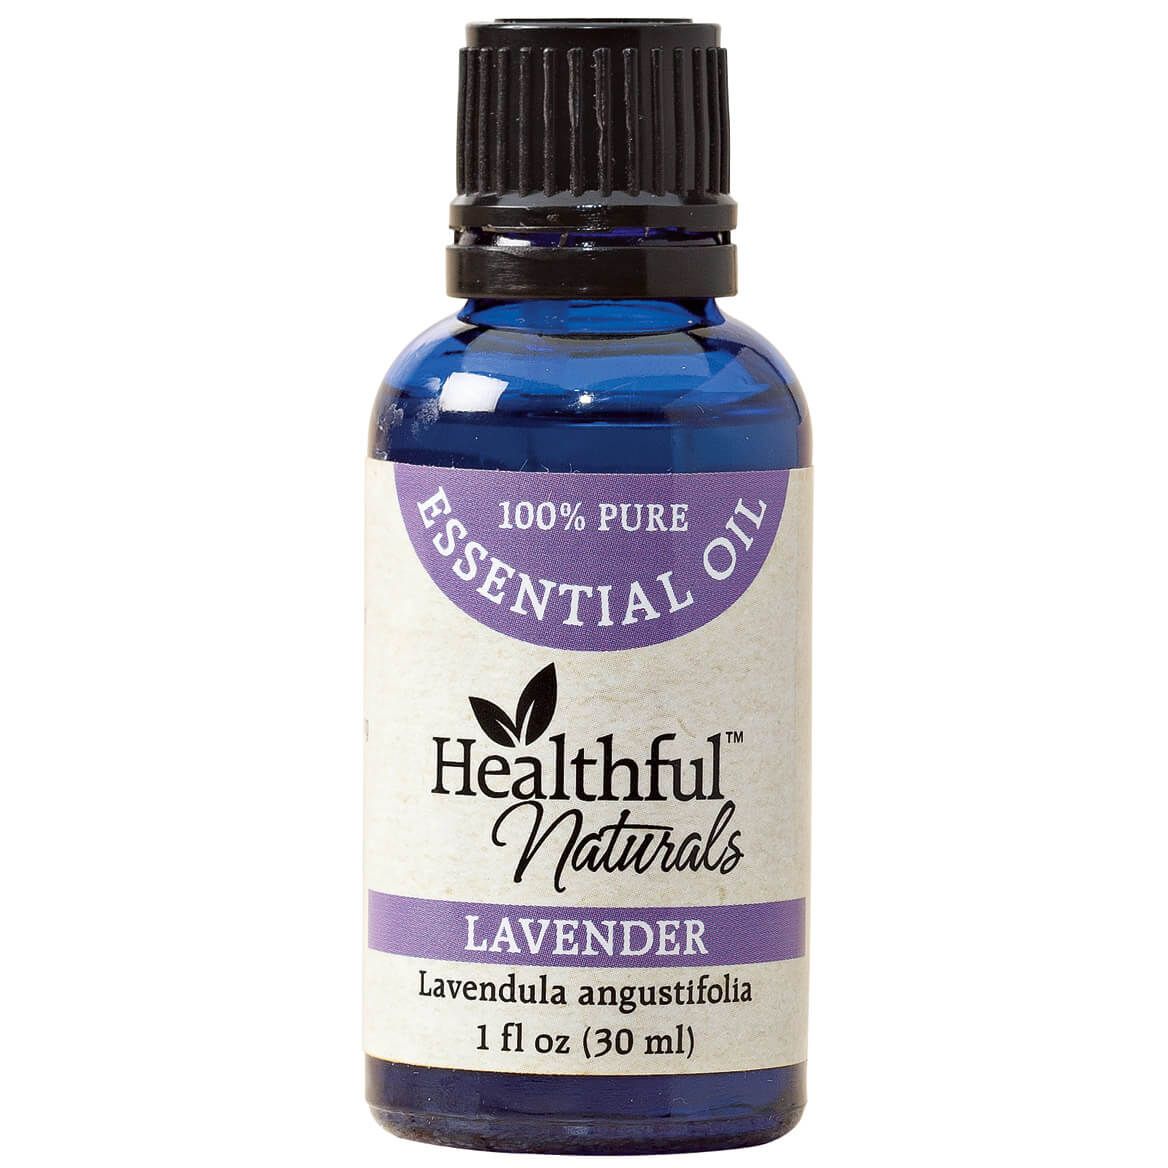 Healthful™ Naturals Lavender Essential Oil, 30 ml + '-' + 353456